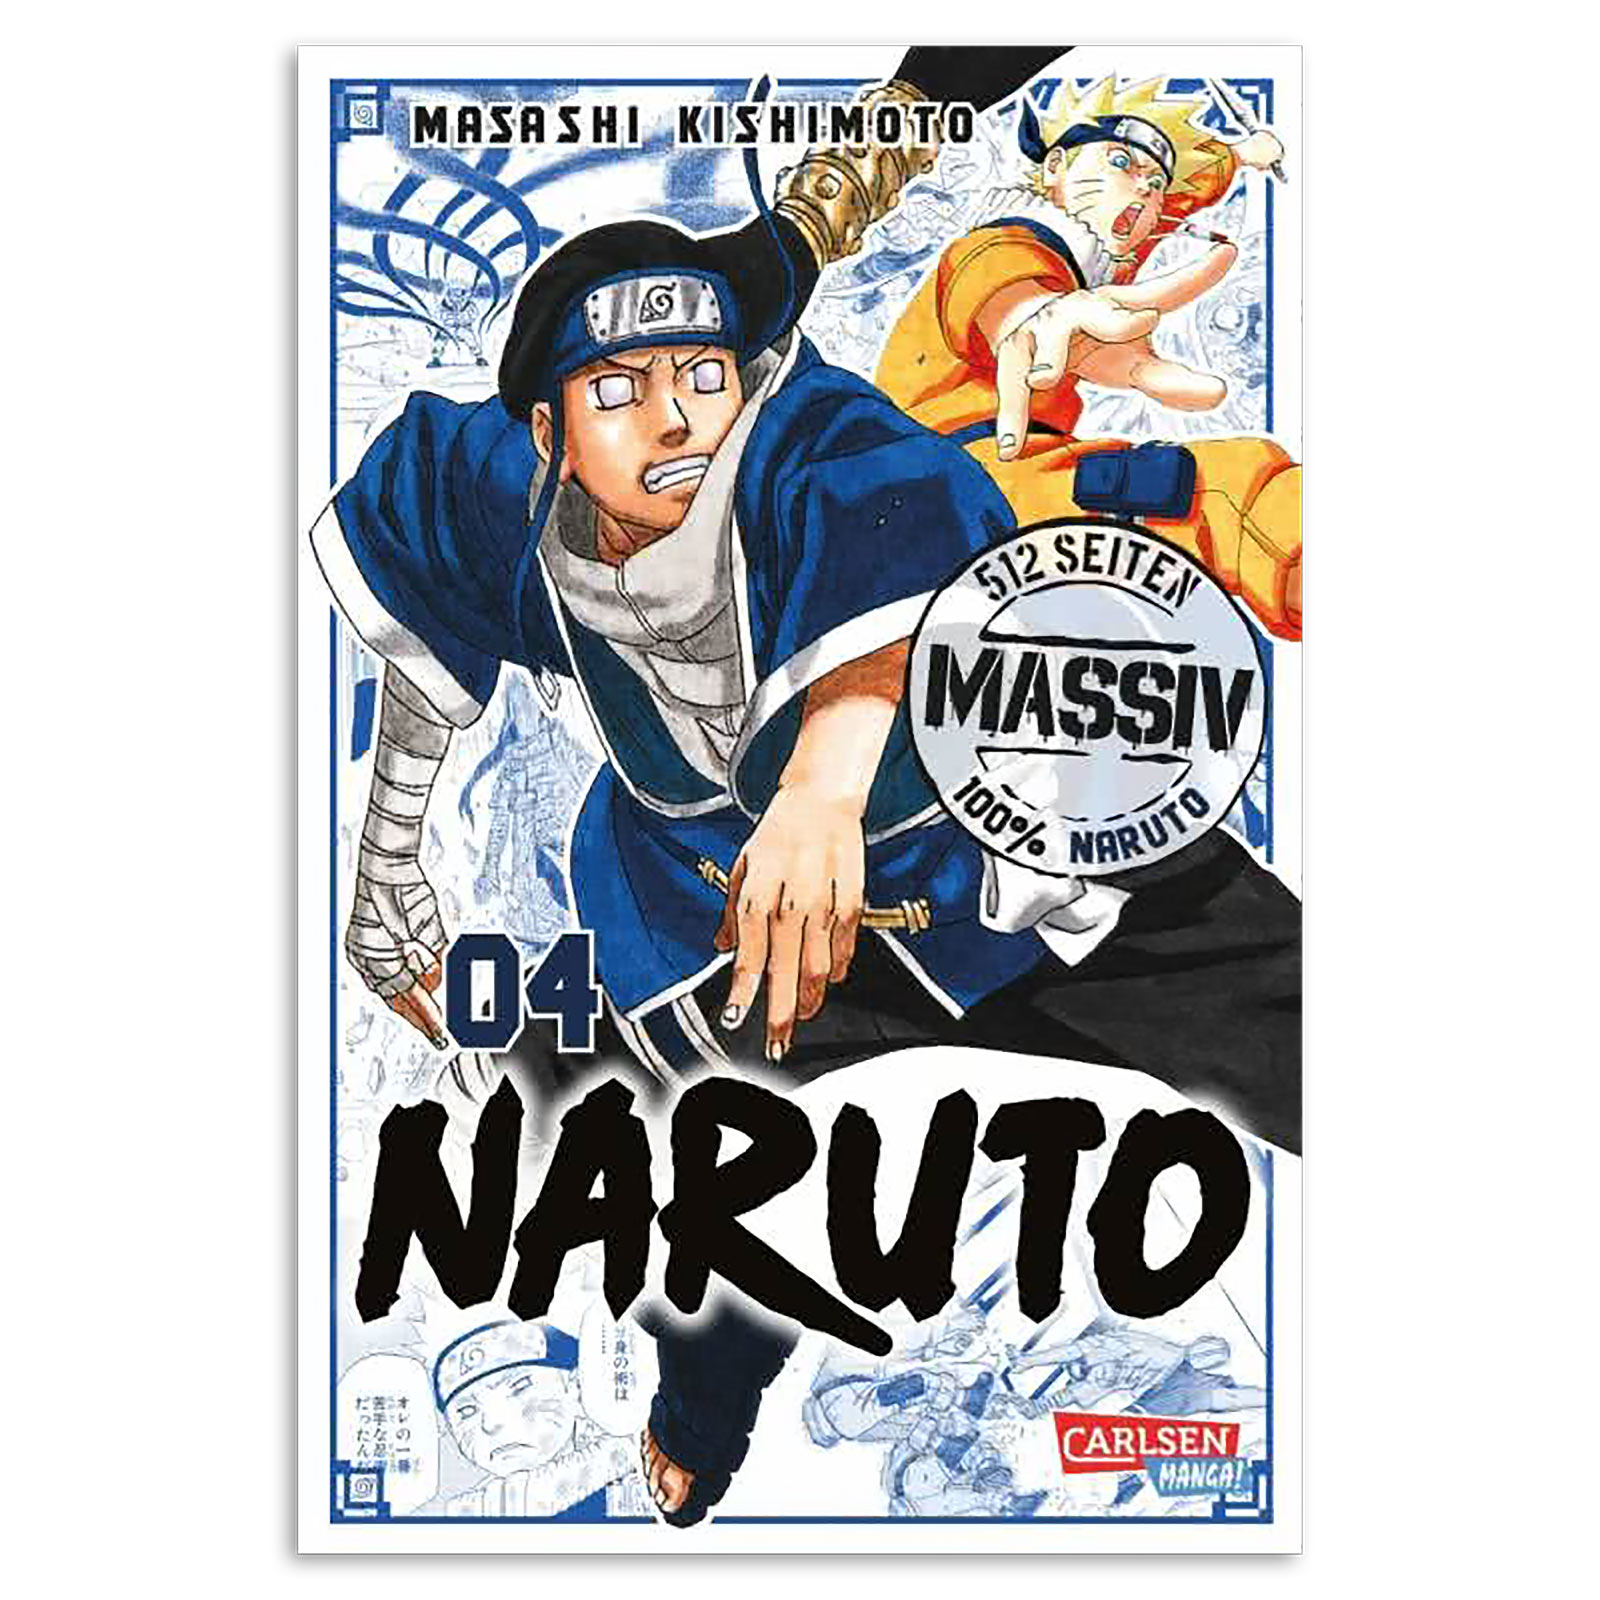 Naruto - Collection Volume 4 Paperback